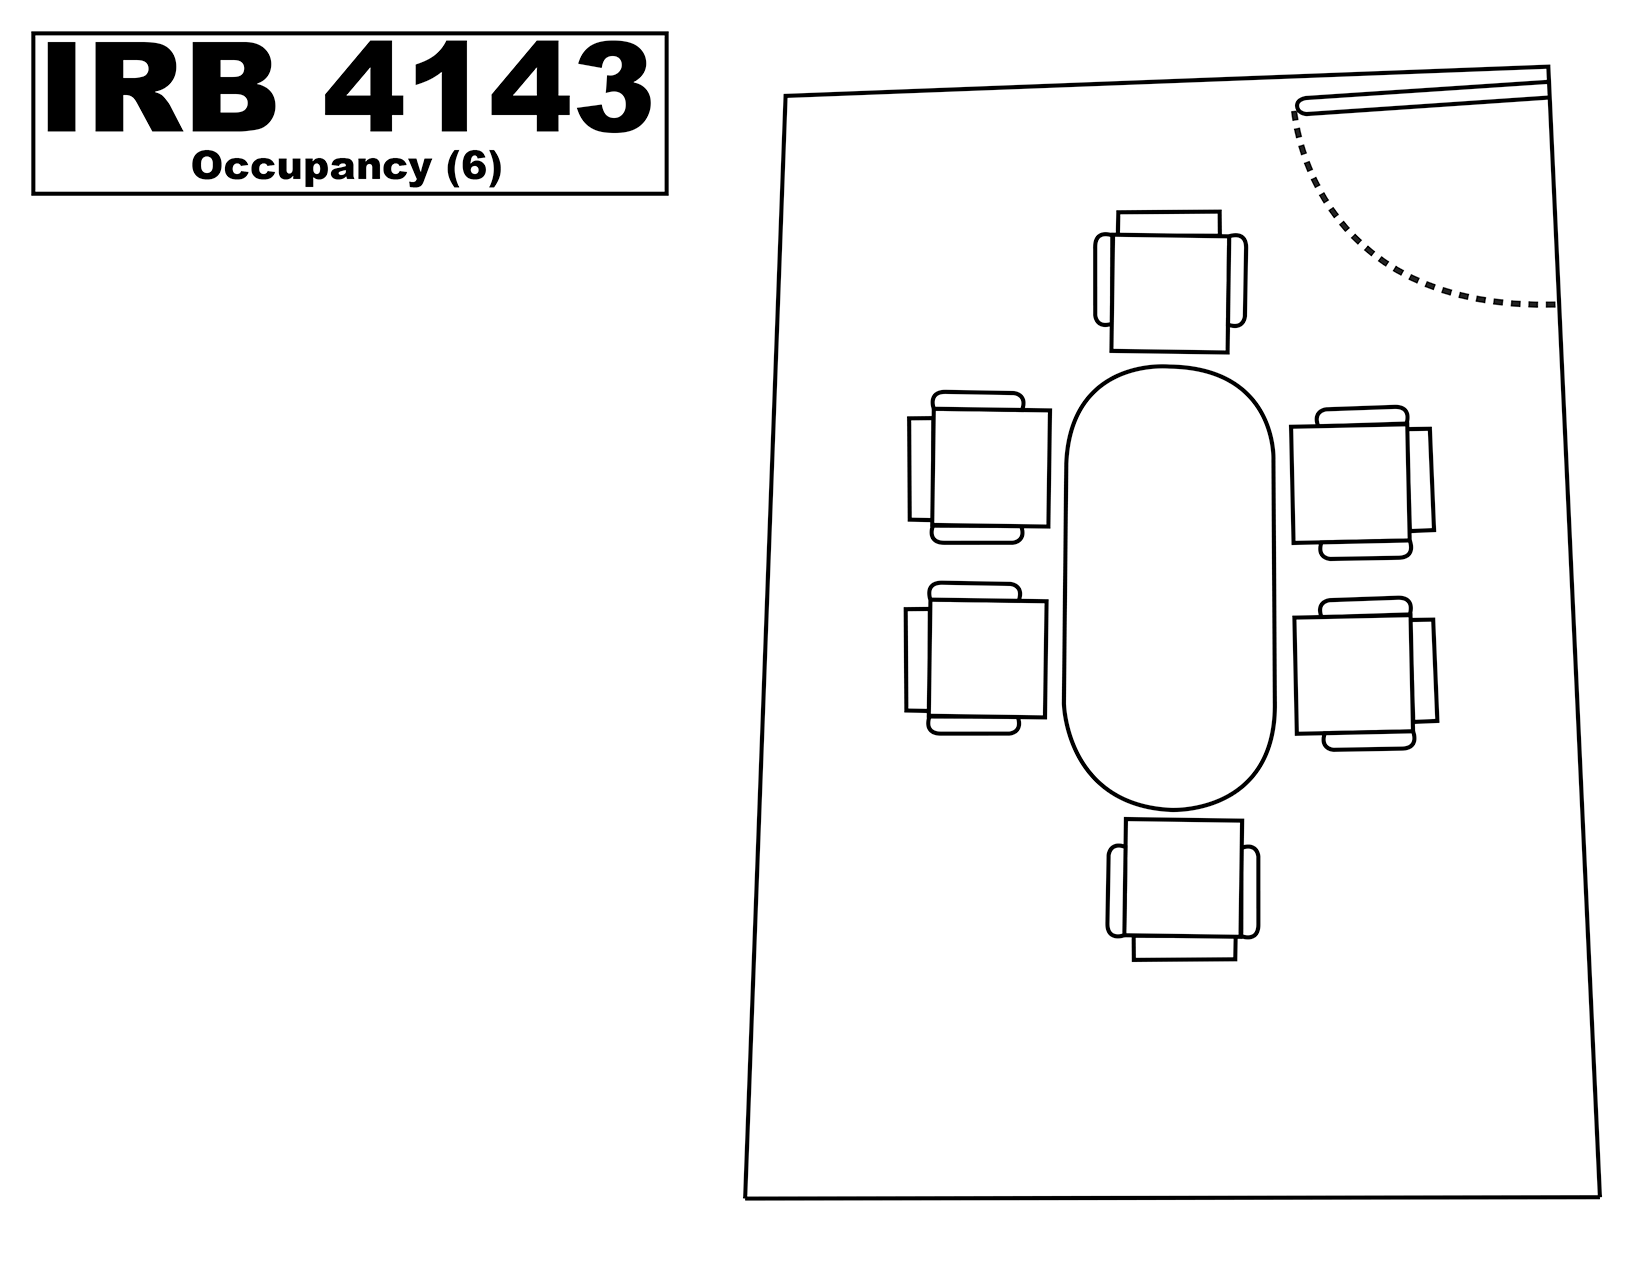 IRB4143 floorplan